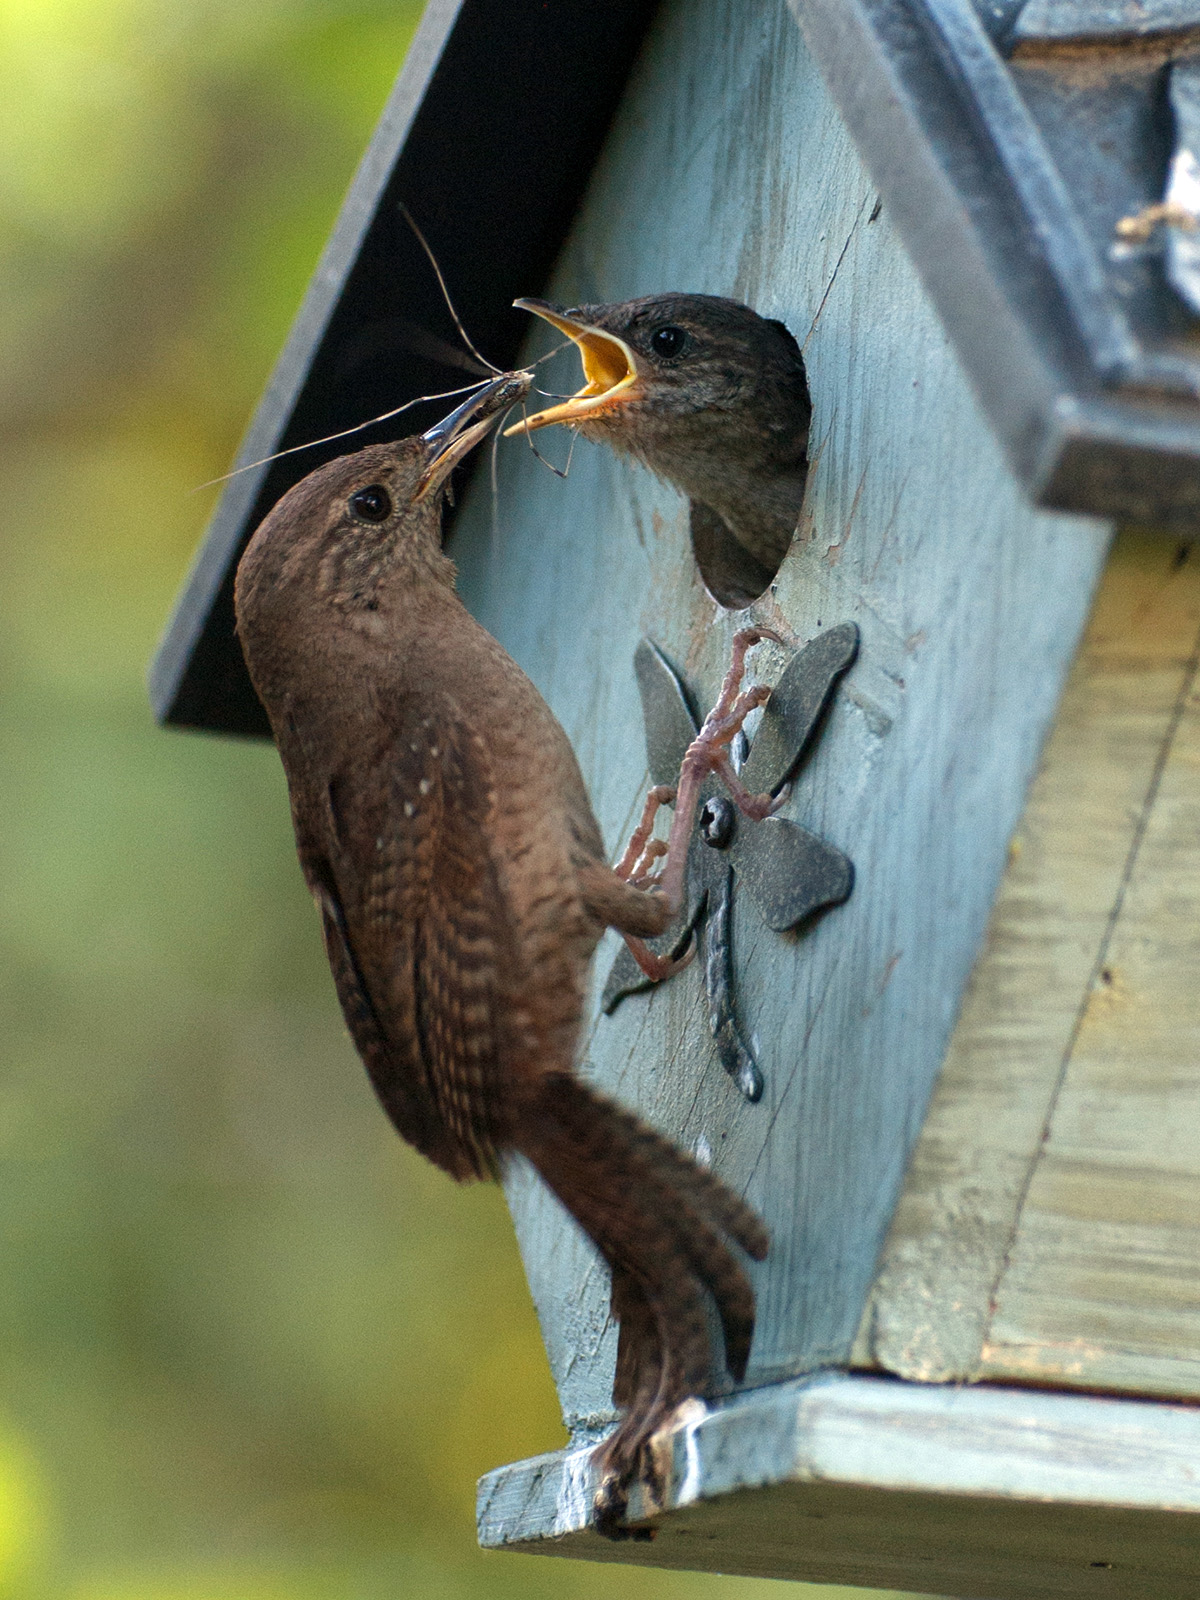 Wren feeding insect to baby bird